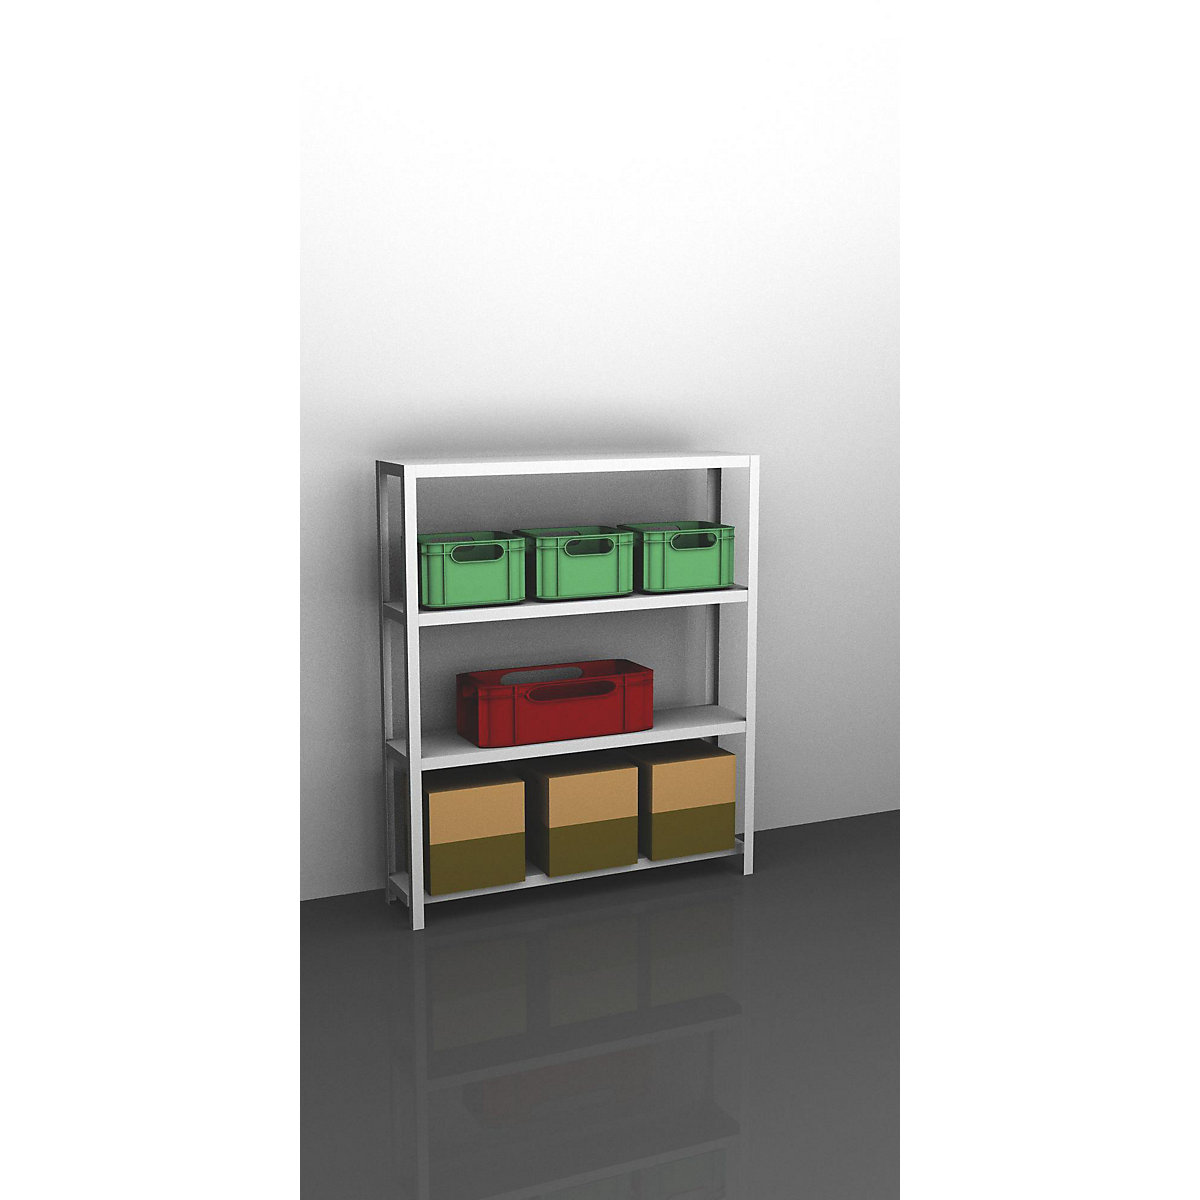 Bolt-together shelf unit, light duty, plastic coated – eurokraft pro, shelf unit height 1500 mm, shelf width 1300 mm, depth 300 mm, standard shelf unit-4